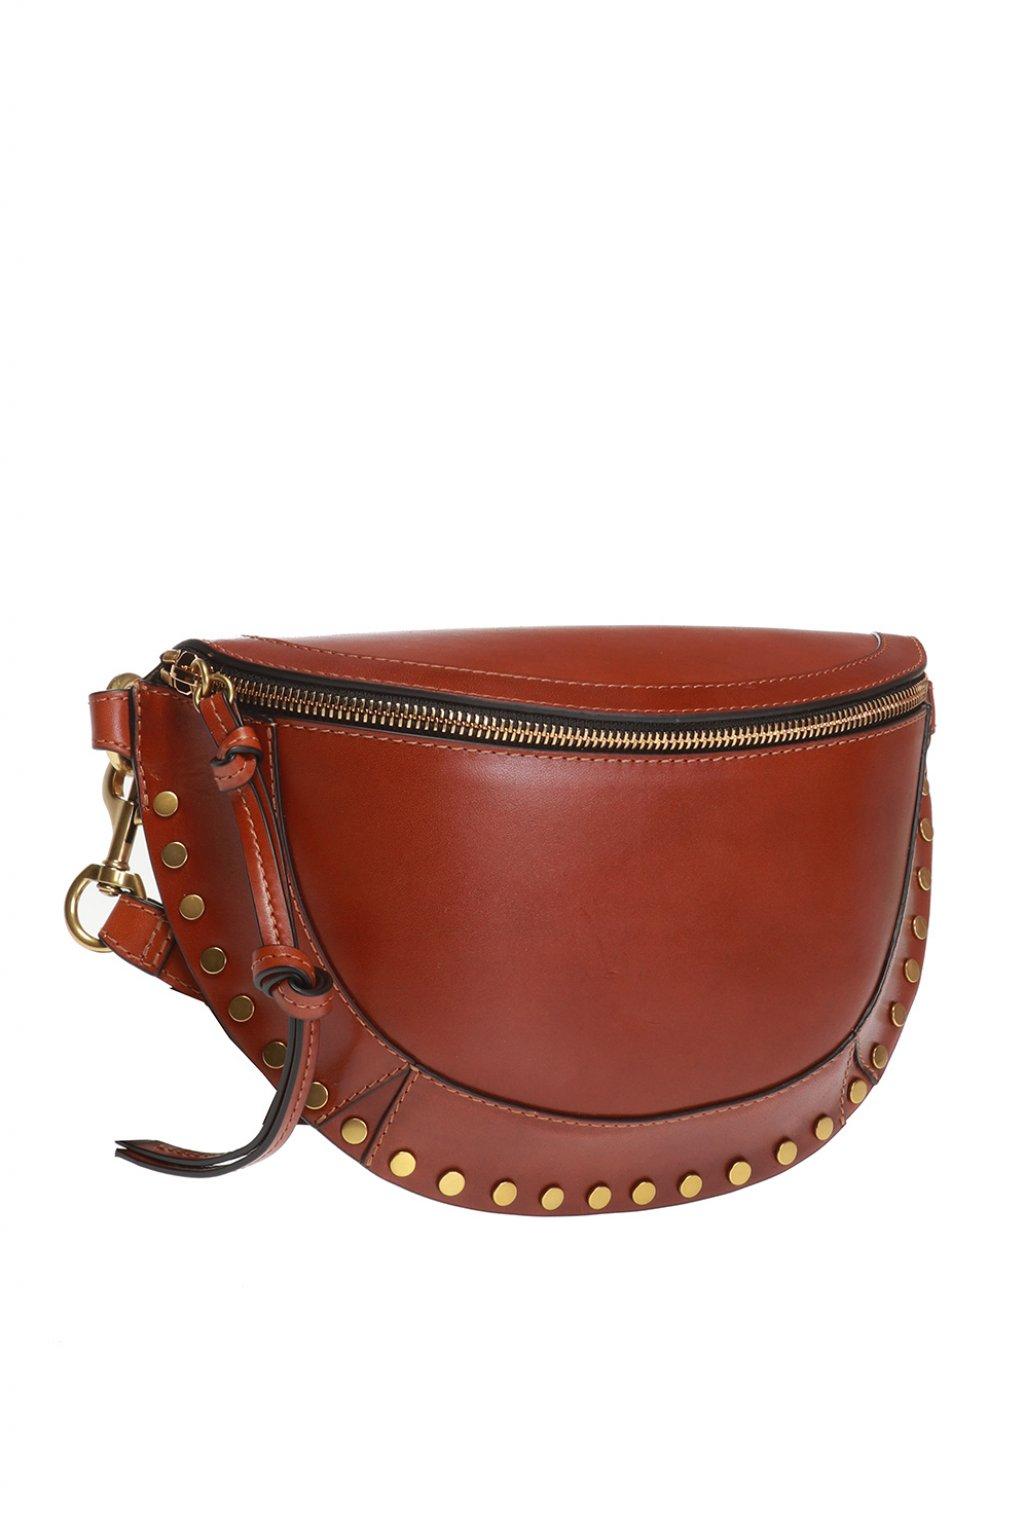 Isabel Marant Leather Skano Belt Bag in Brown - Save 26% - Lyst